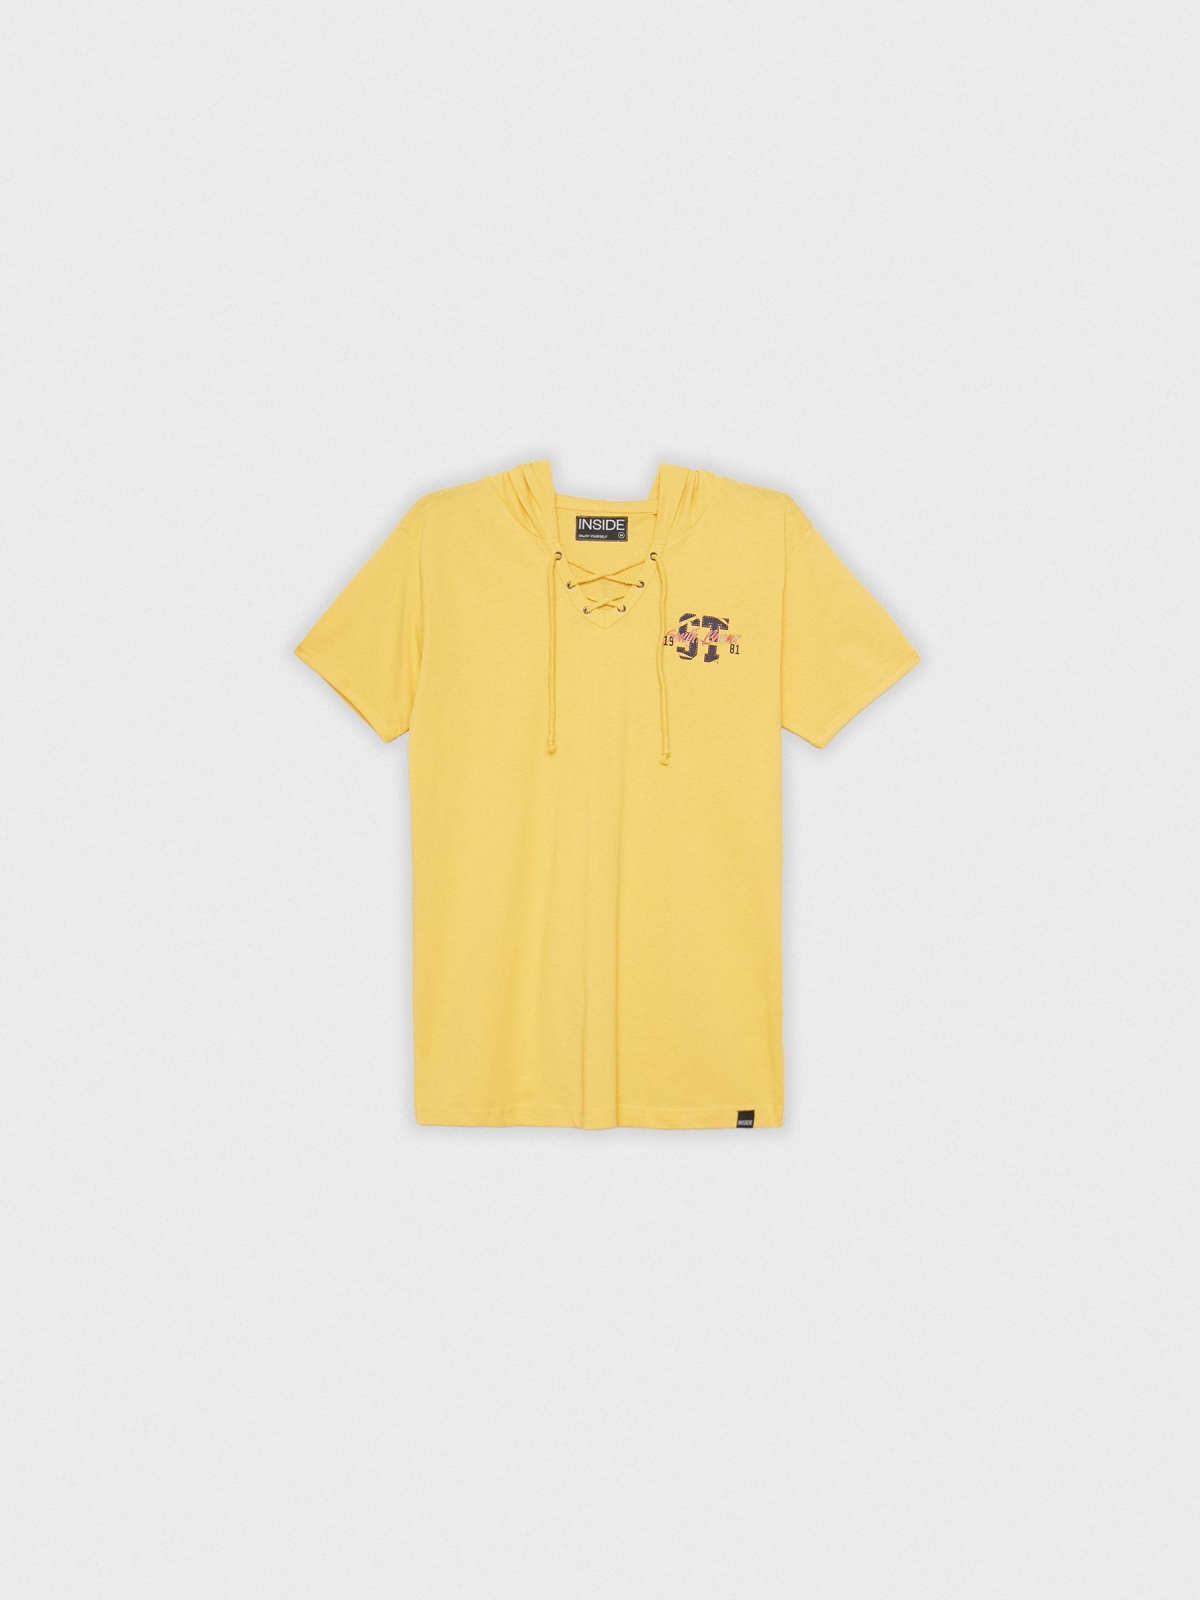  Camiseta estampado deportivo amarillo pastel